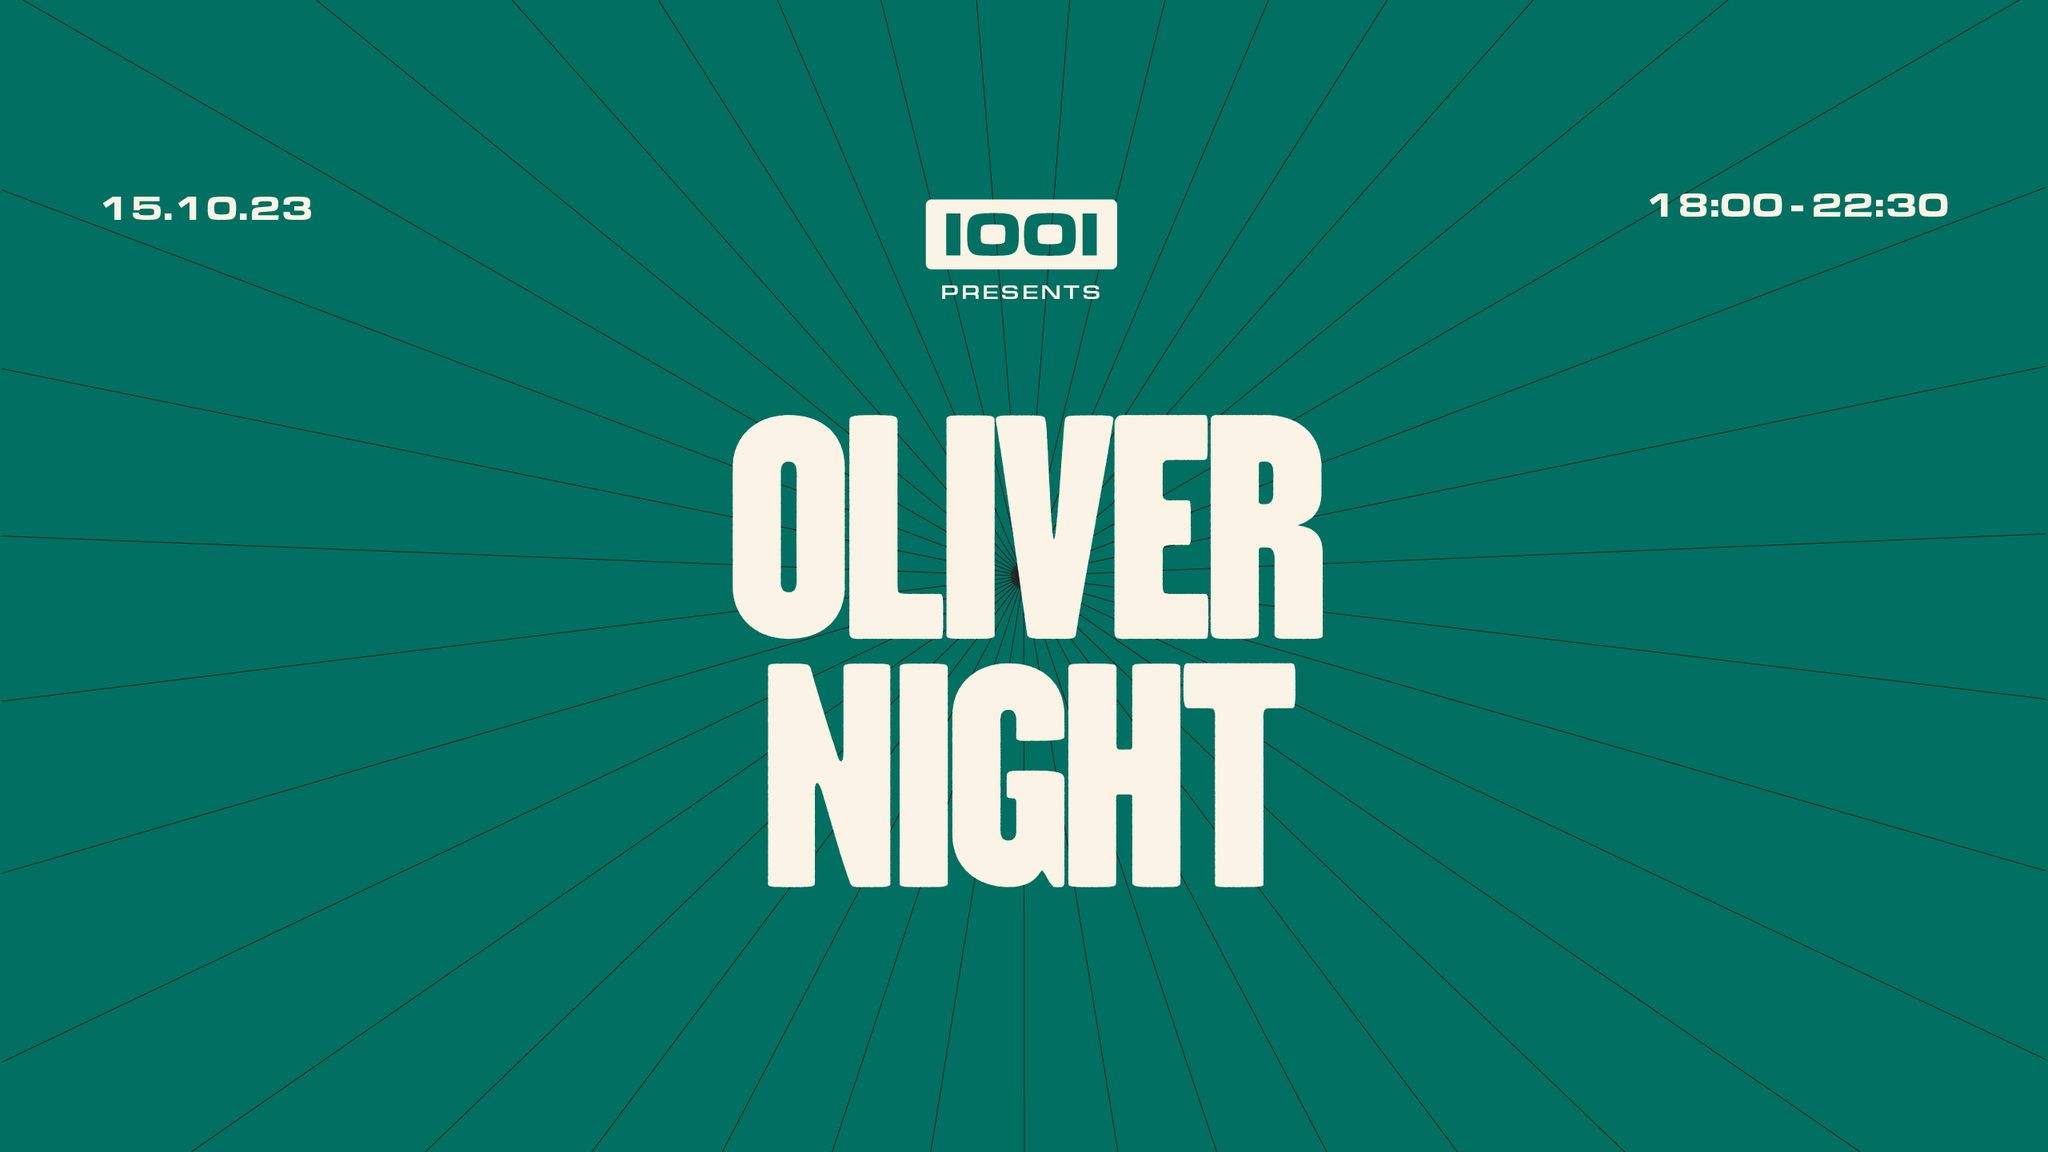 1001 presents Oliver Night - フライヤー表